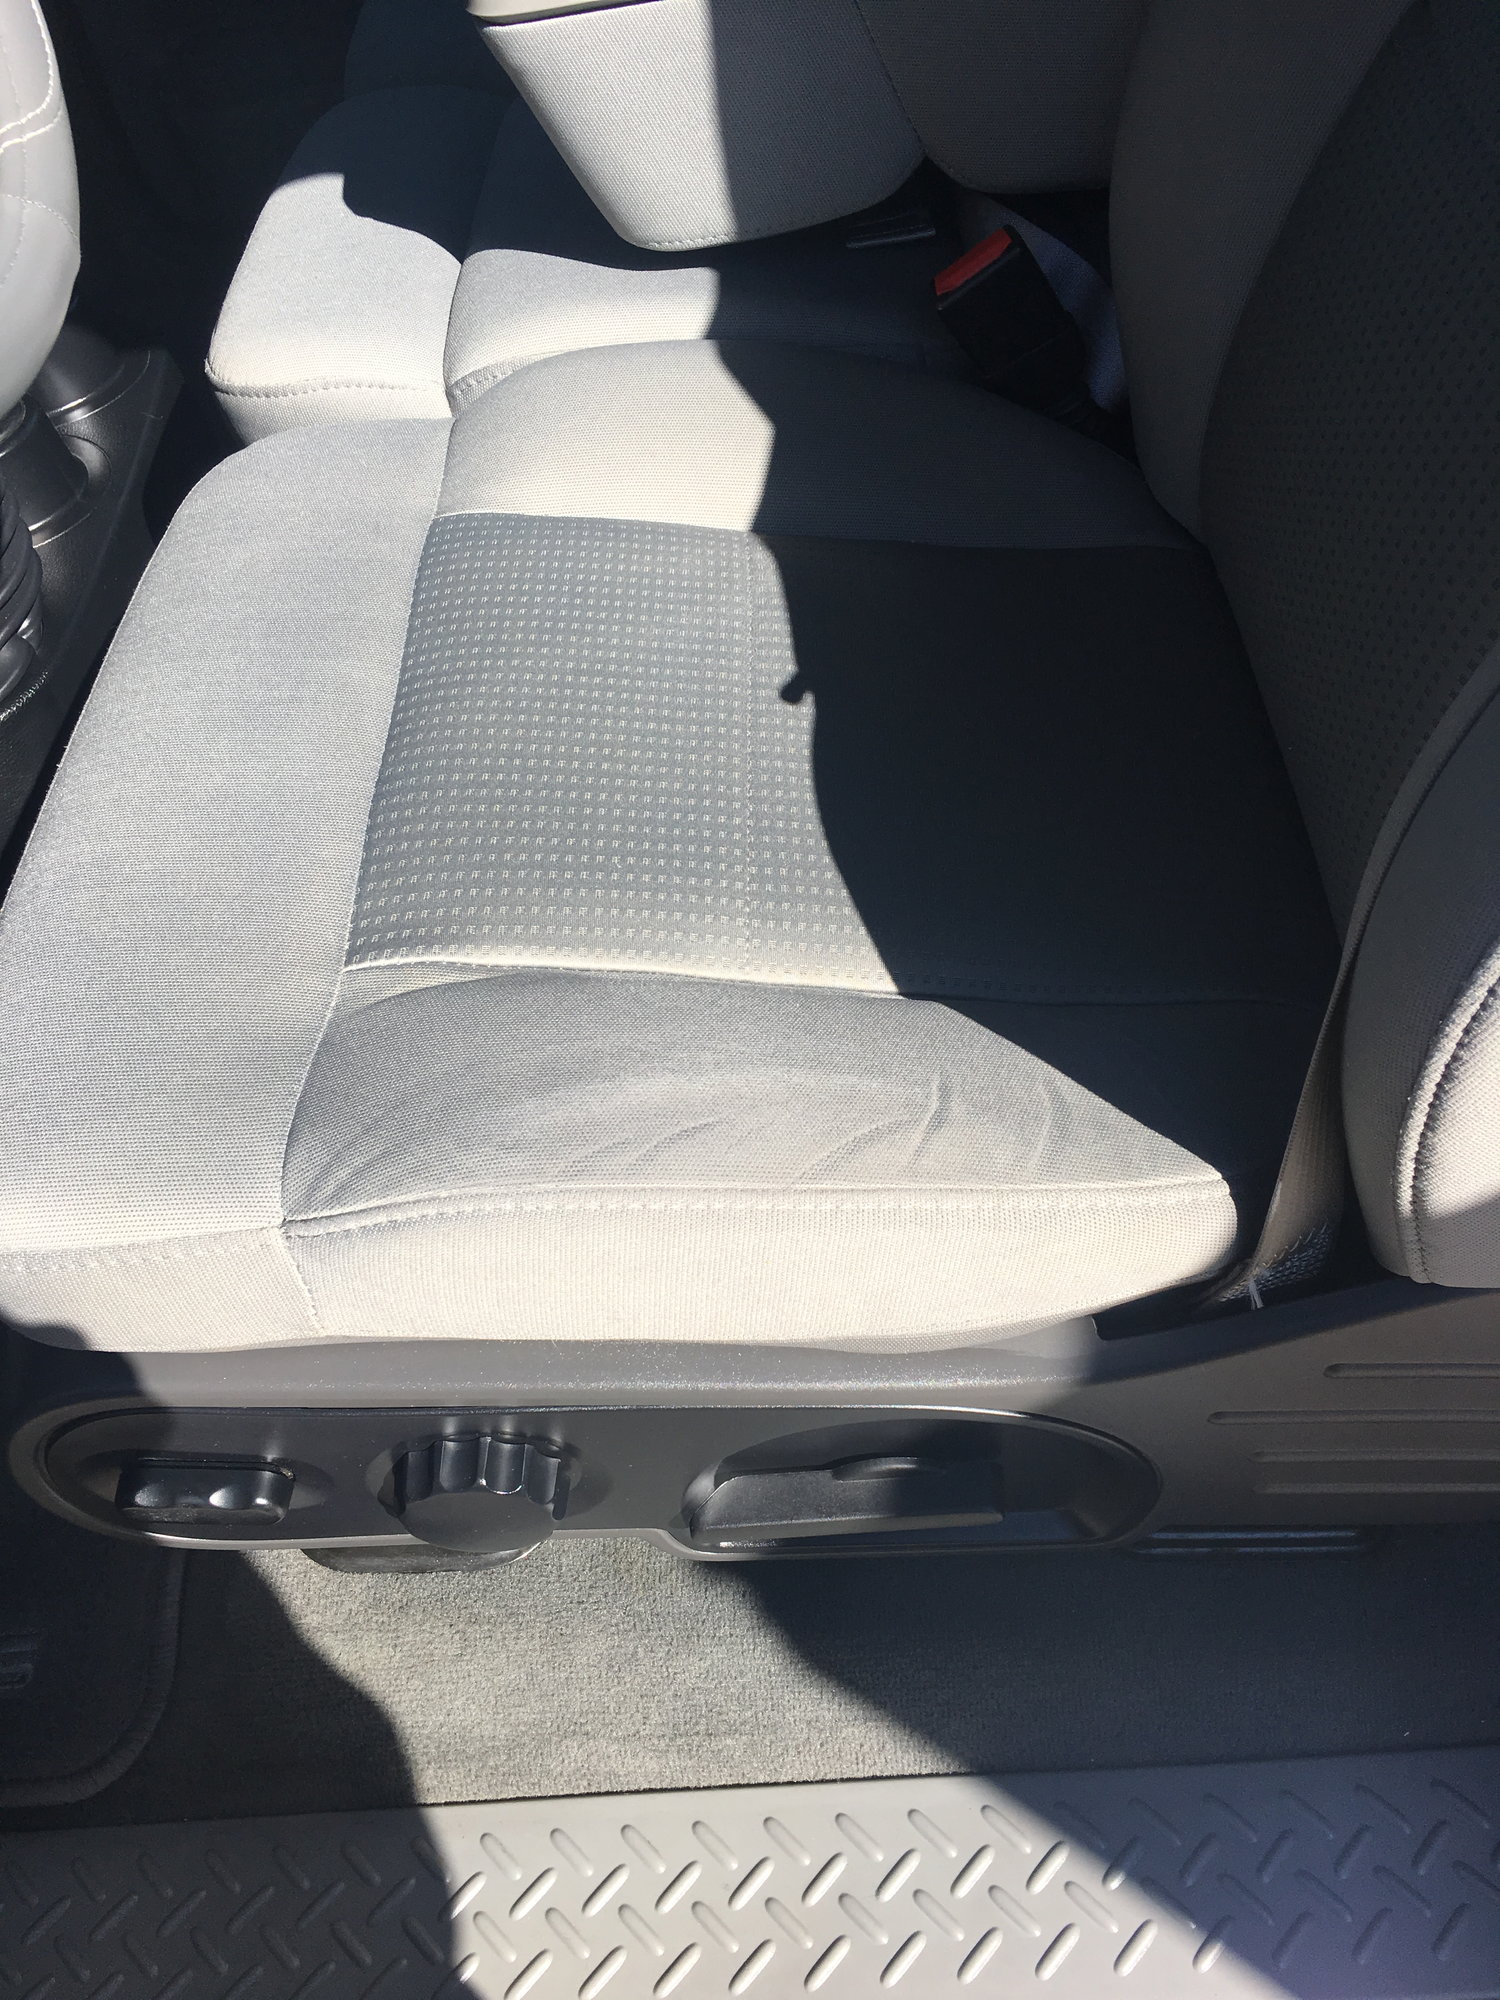 Oem Driver Seat Cushion Alternative - Ford F150 Forum - Community